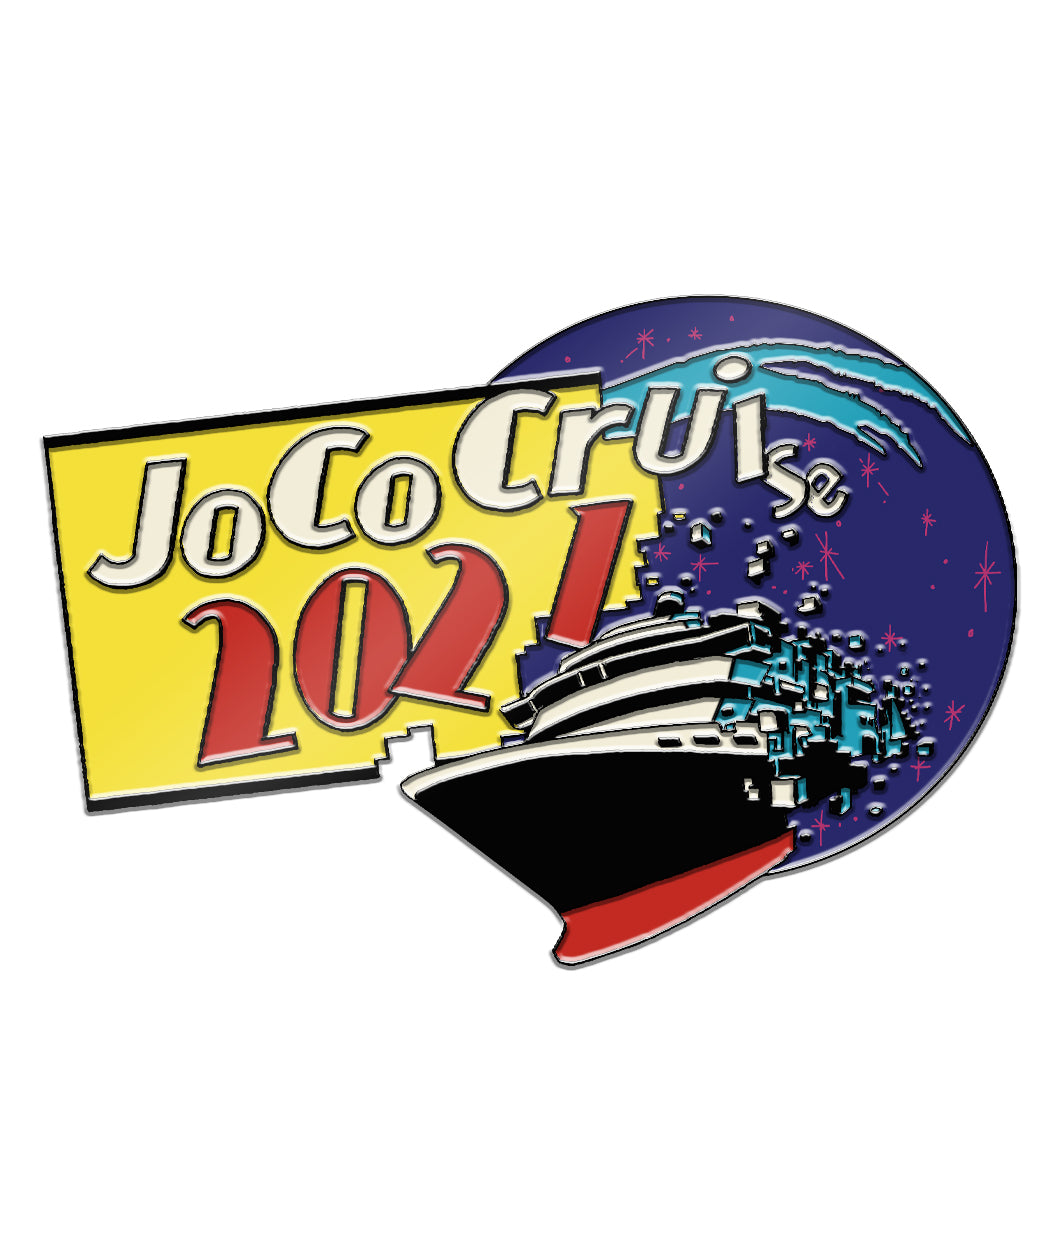 A pin showing a cruise ship that says "Joco Cruise 2021".